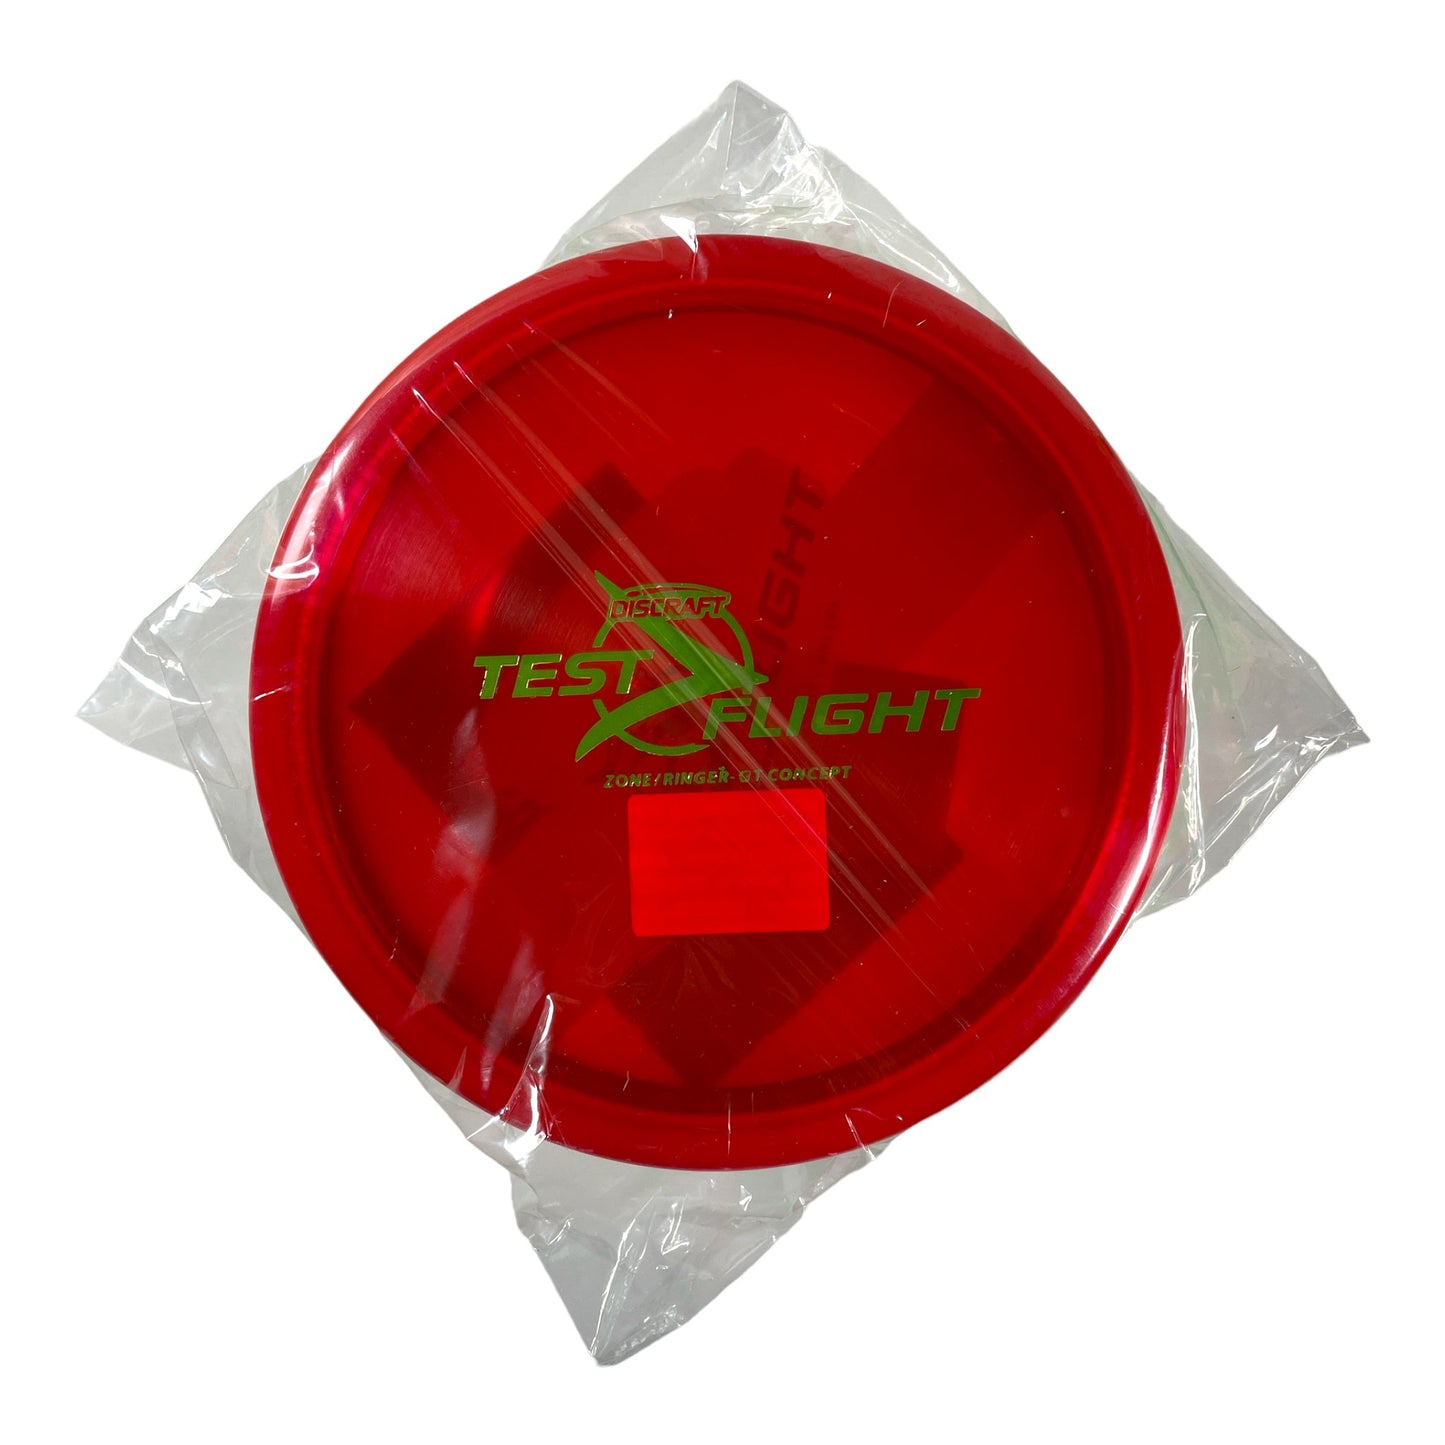 Discraft Zone GT Battle Pack | Red (Ringer) / Green (Banger) 170-174g Disc Golf